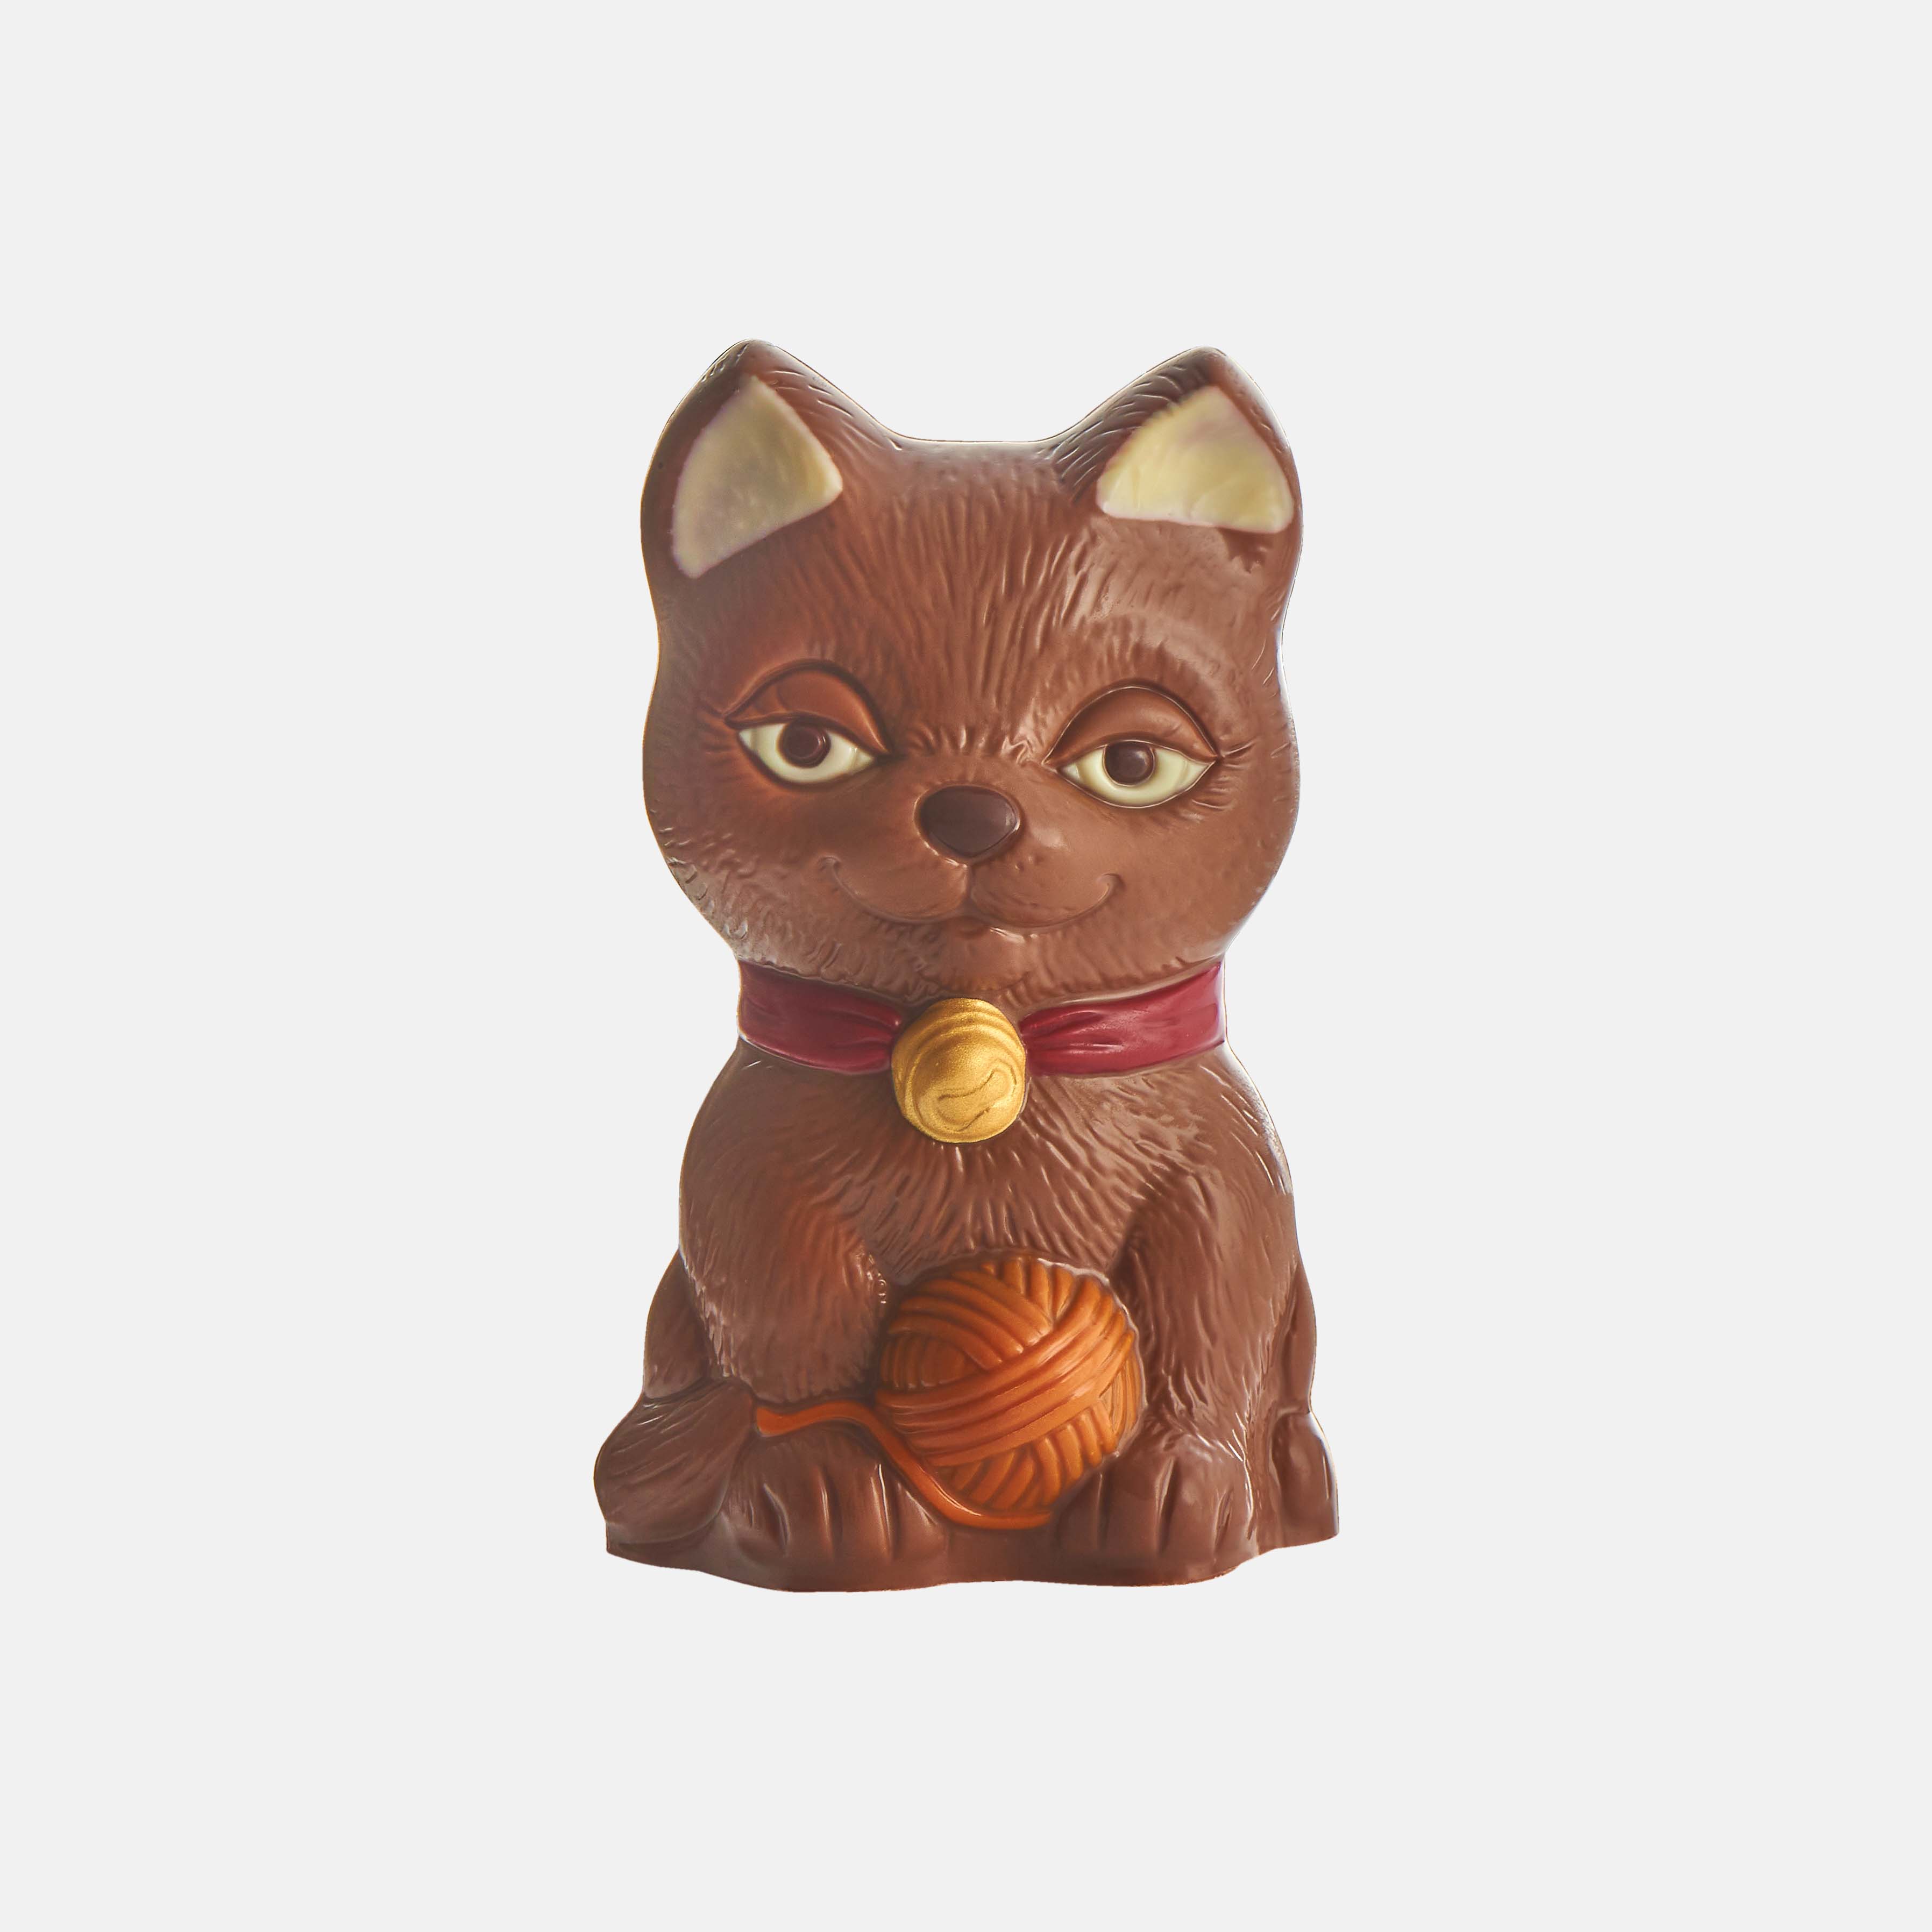 Hand-painted chocolate Cat